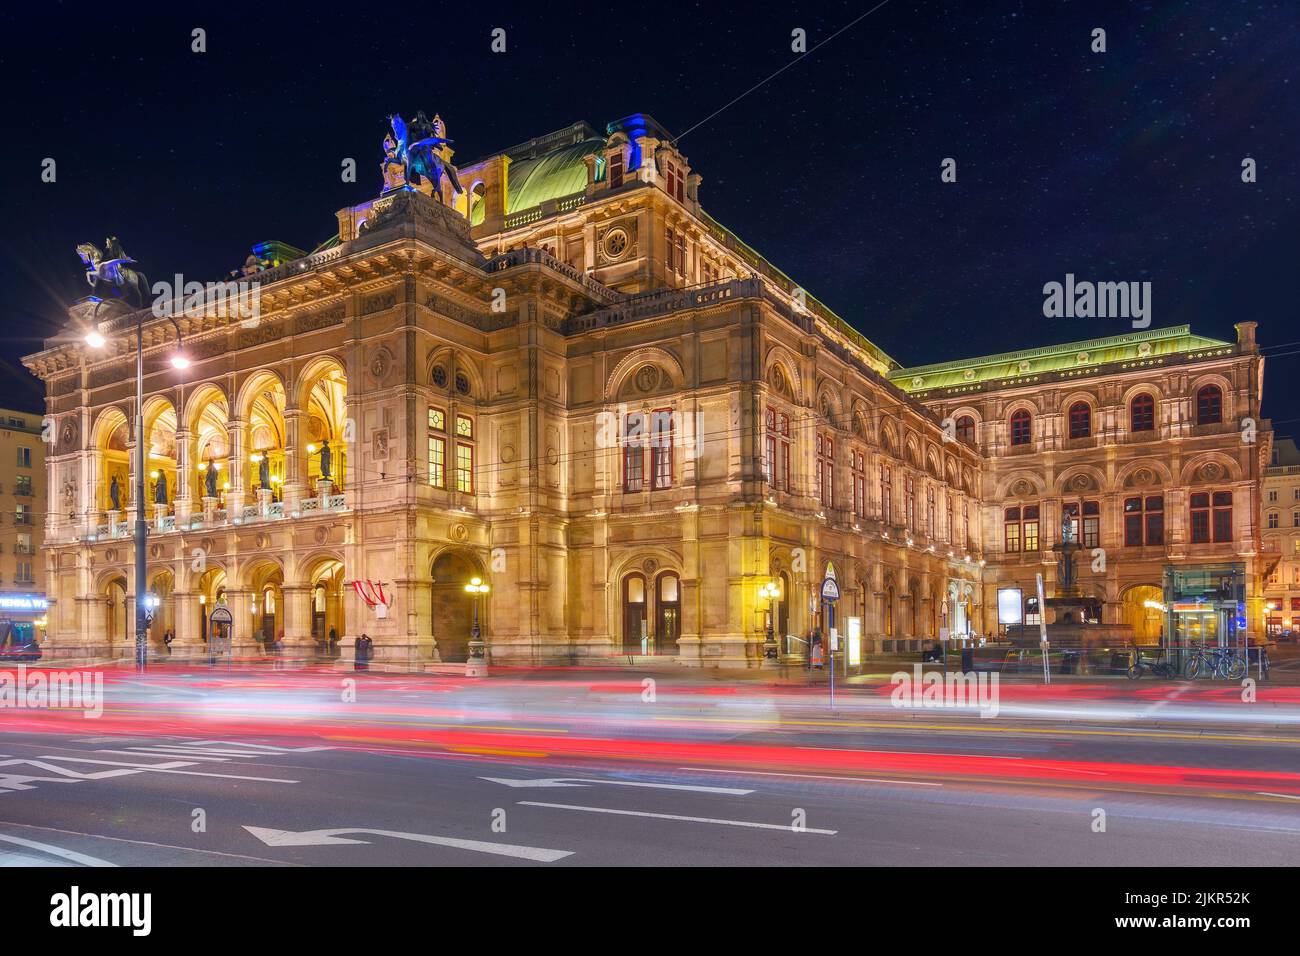 vienna, austria - oct 17, 2019: facade of famous opera house at night. popular travel destination Stock Photo